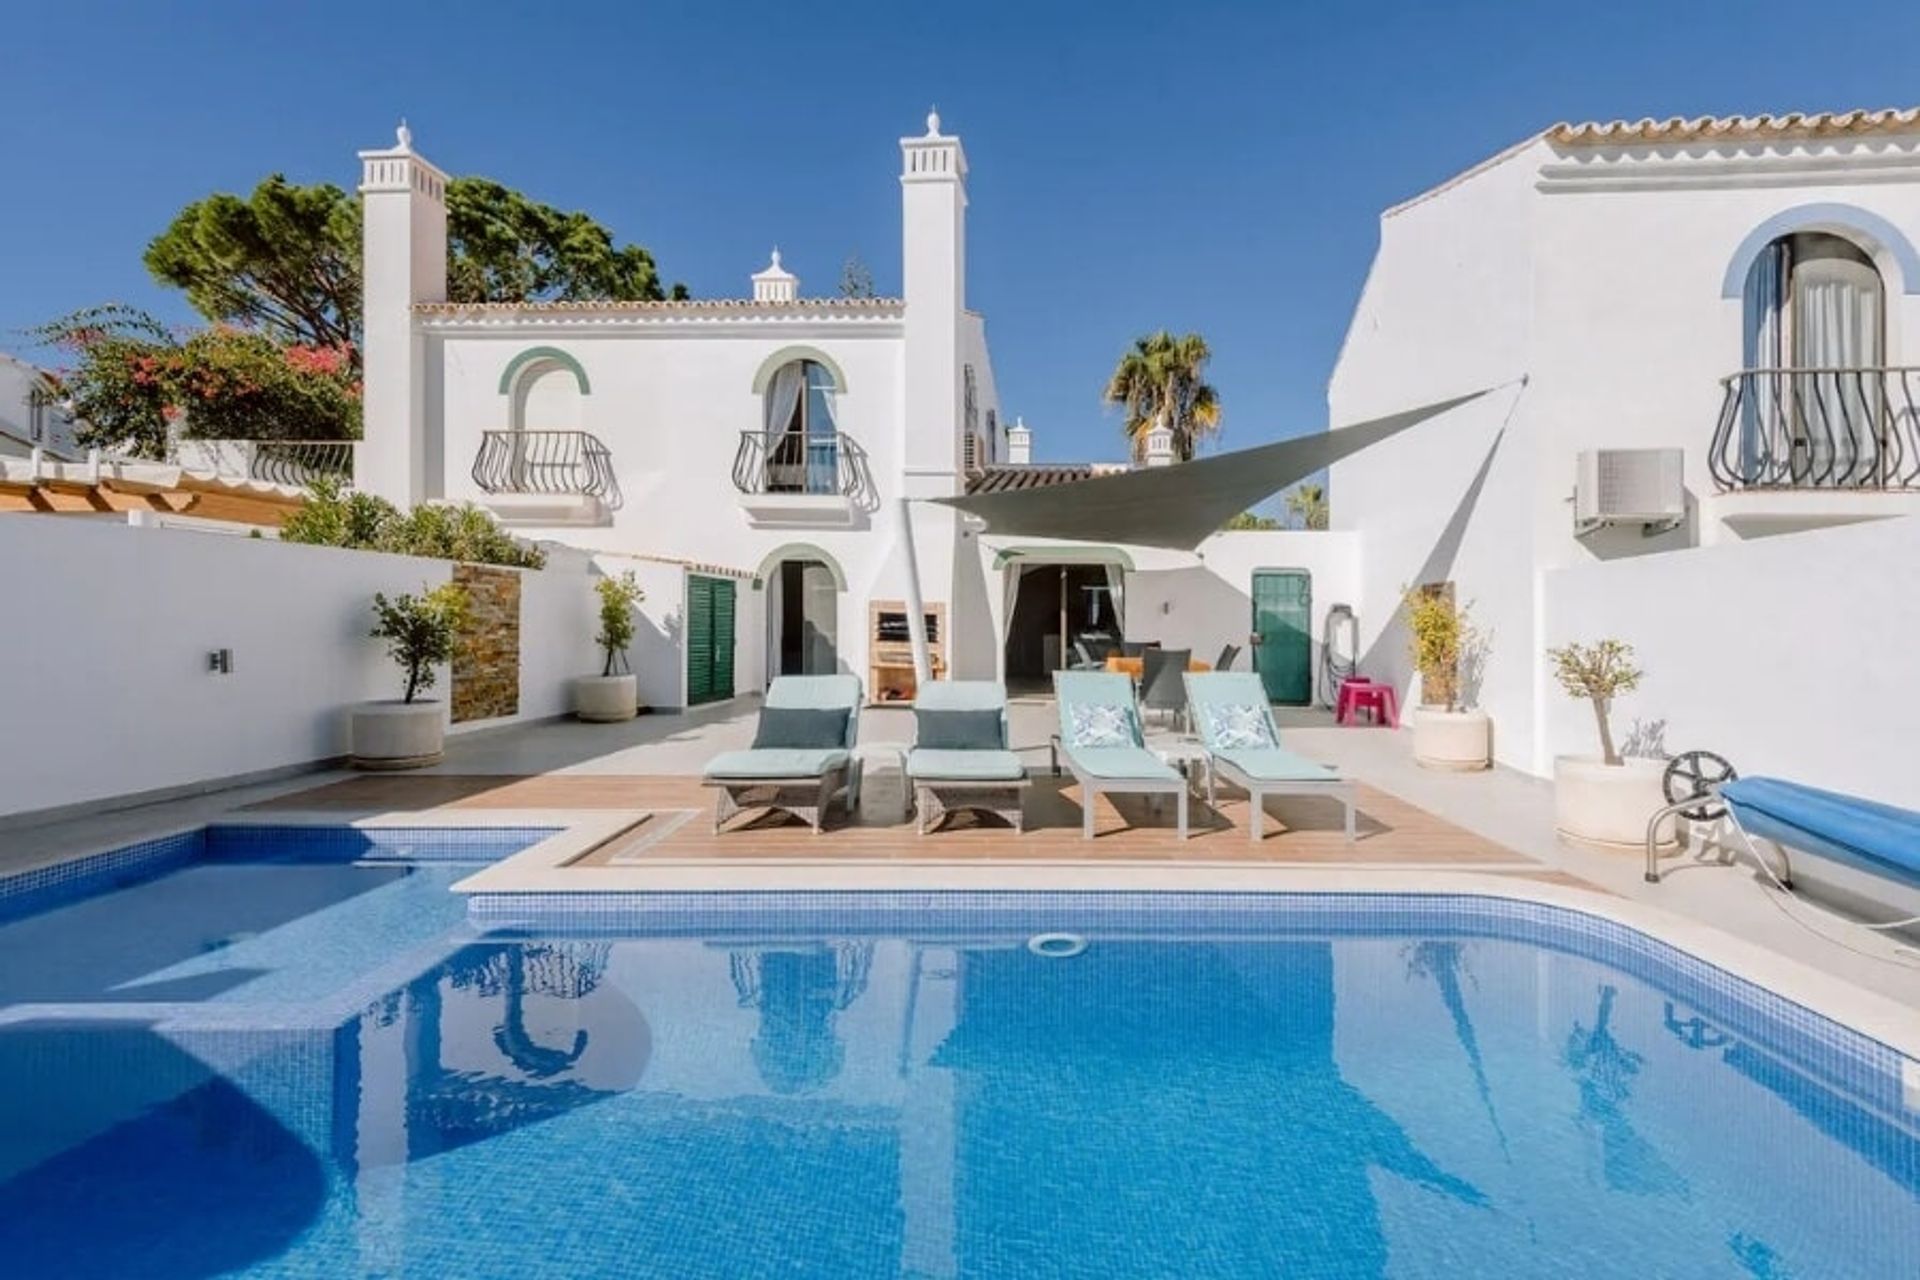 de beste Airbnb's in Portugal